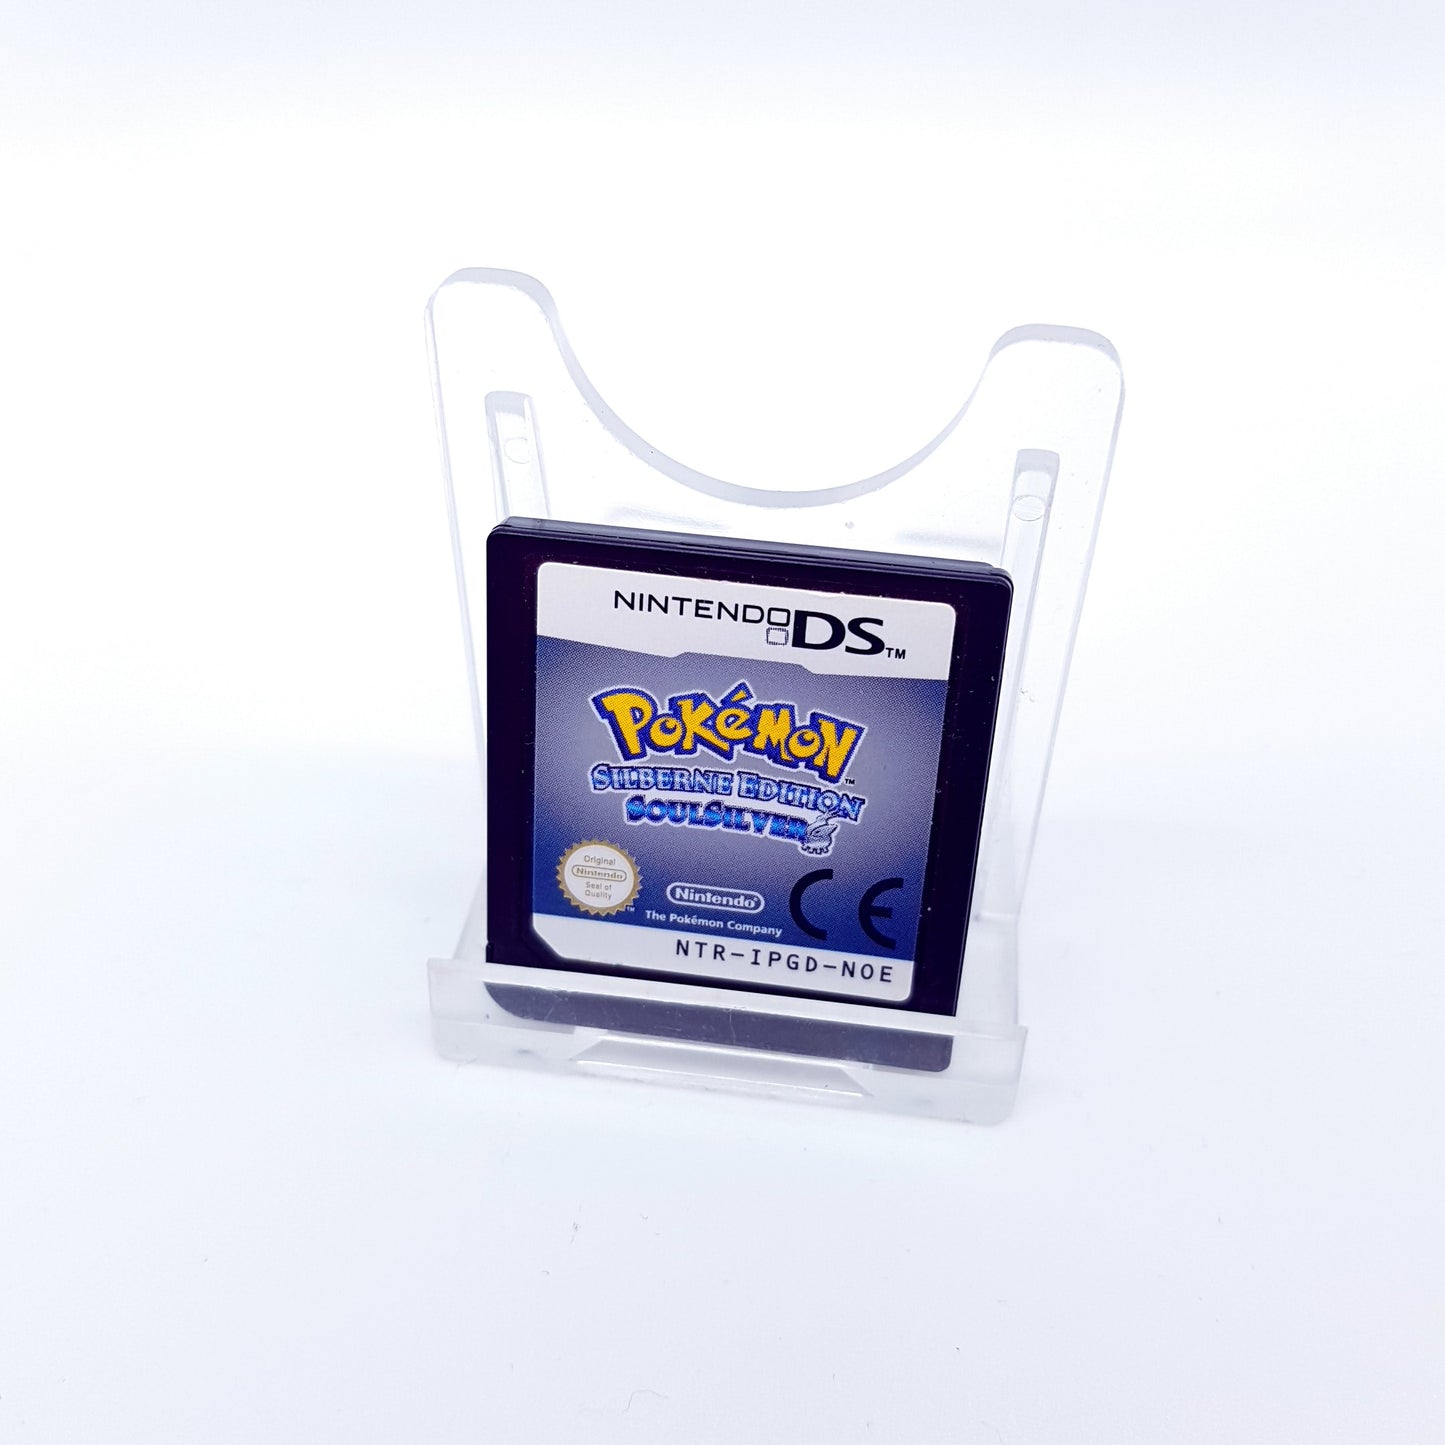 Nintendo DS - Pokemon silberne Edition Soulsilver (CIB komplett) - gebraucht